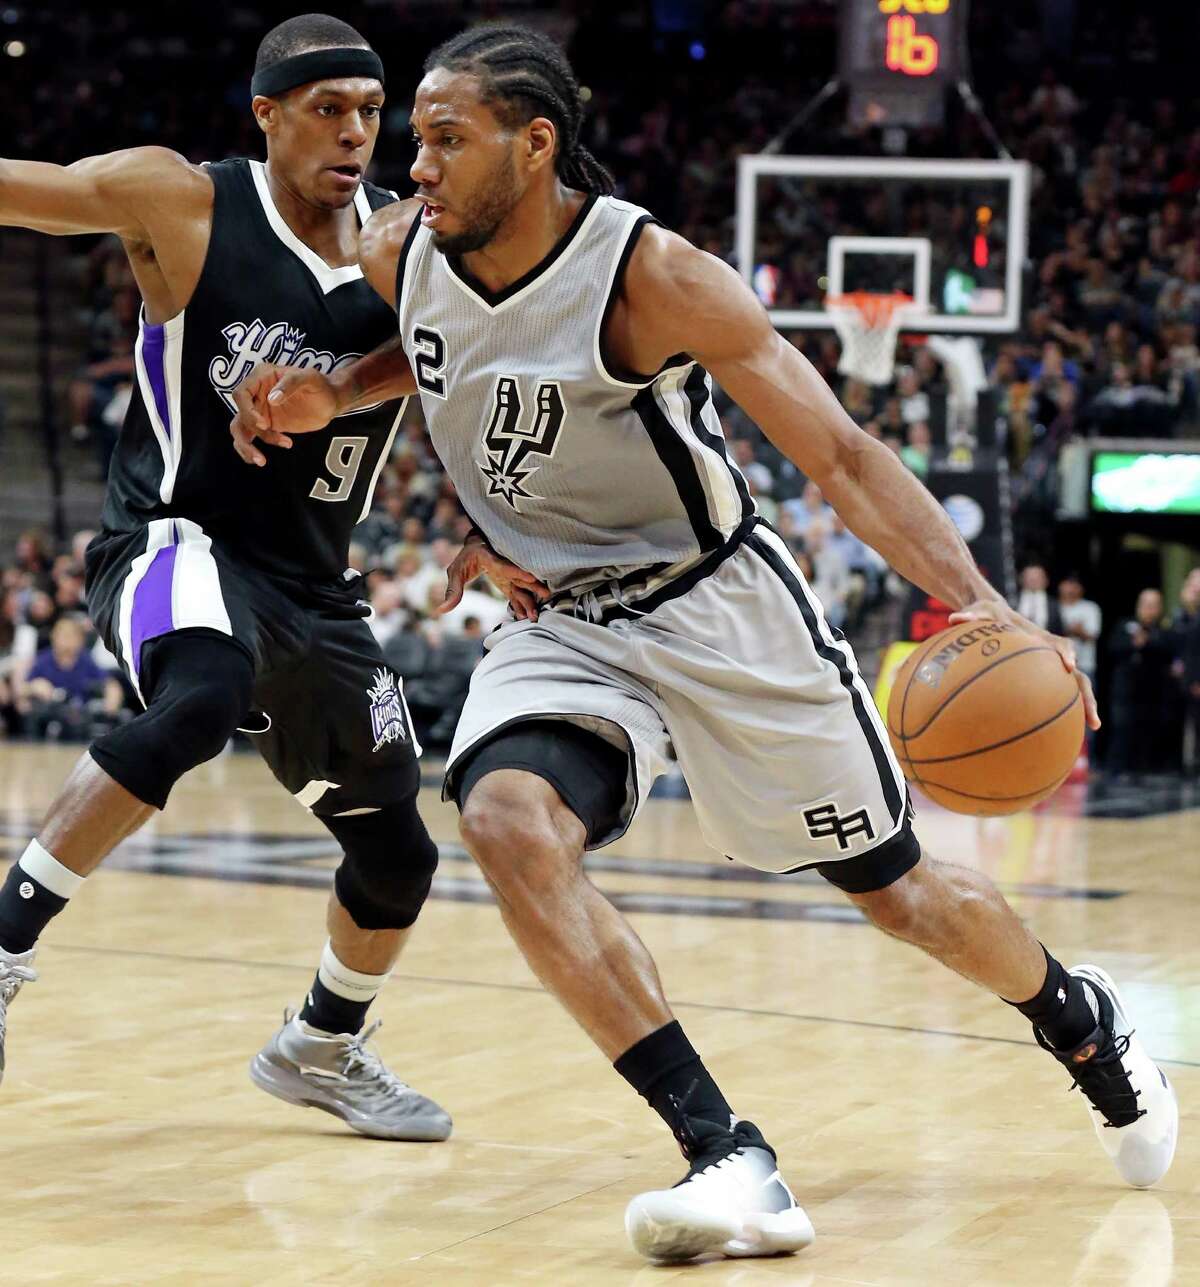 San Antonio Spurs' Kawhi Leonard drives around Sacramento Kings' Rajon Rondo during second half action Saturday March 5, 2016 at the AT&T Center. The Spurs won 104-94.